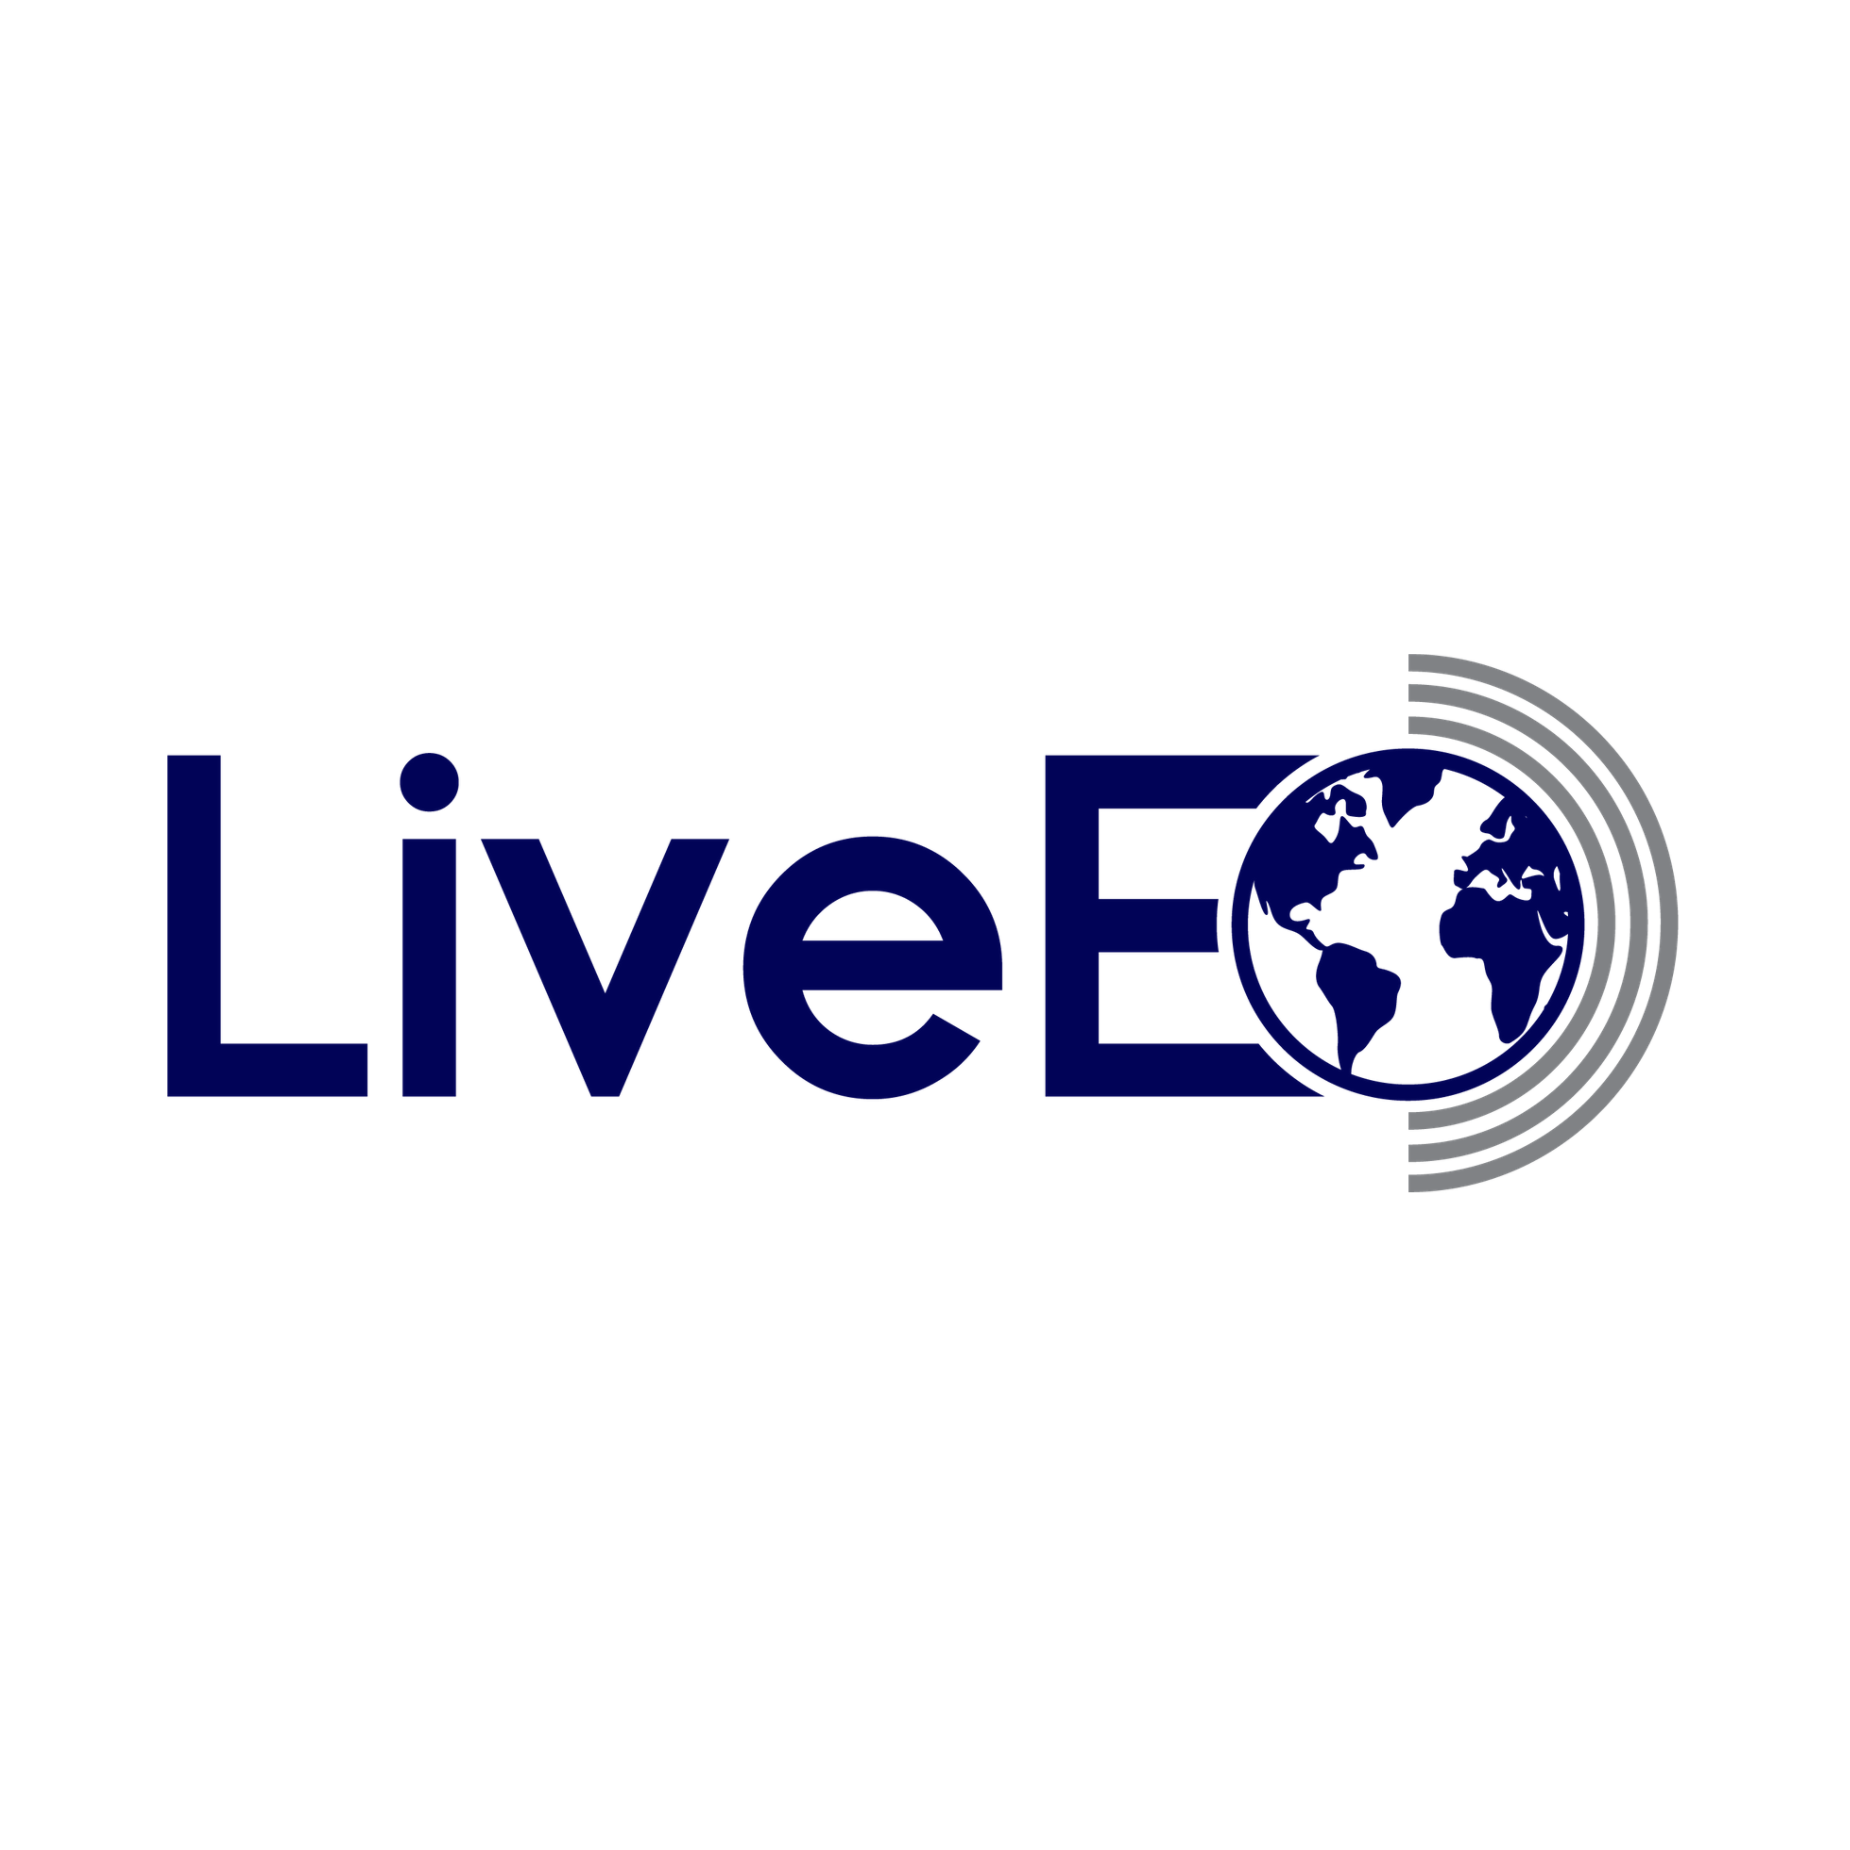 ESA Jumpstarts LiveEO’s Product Development